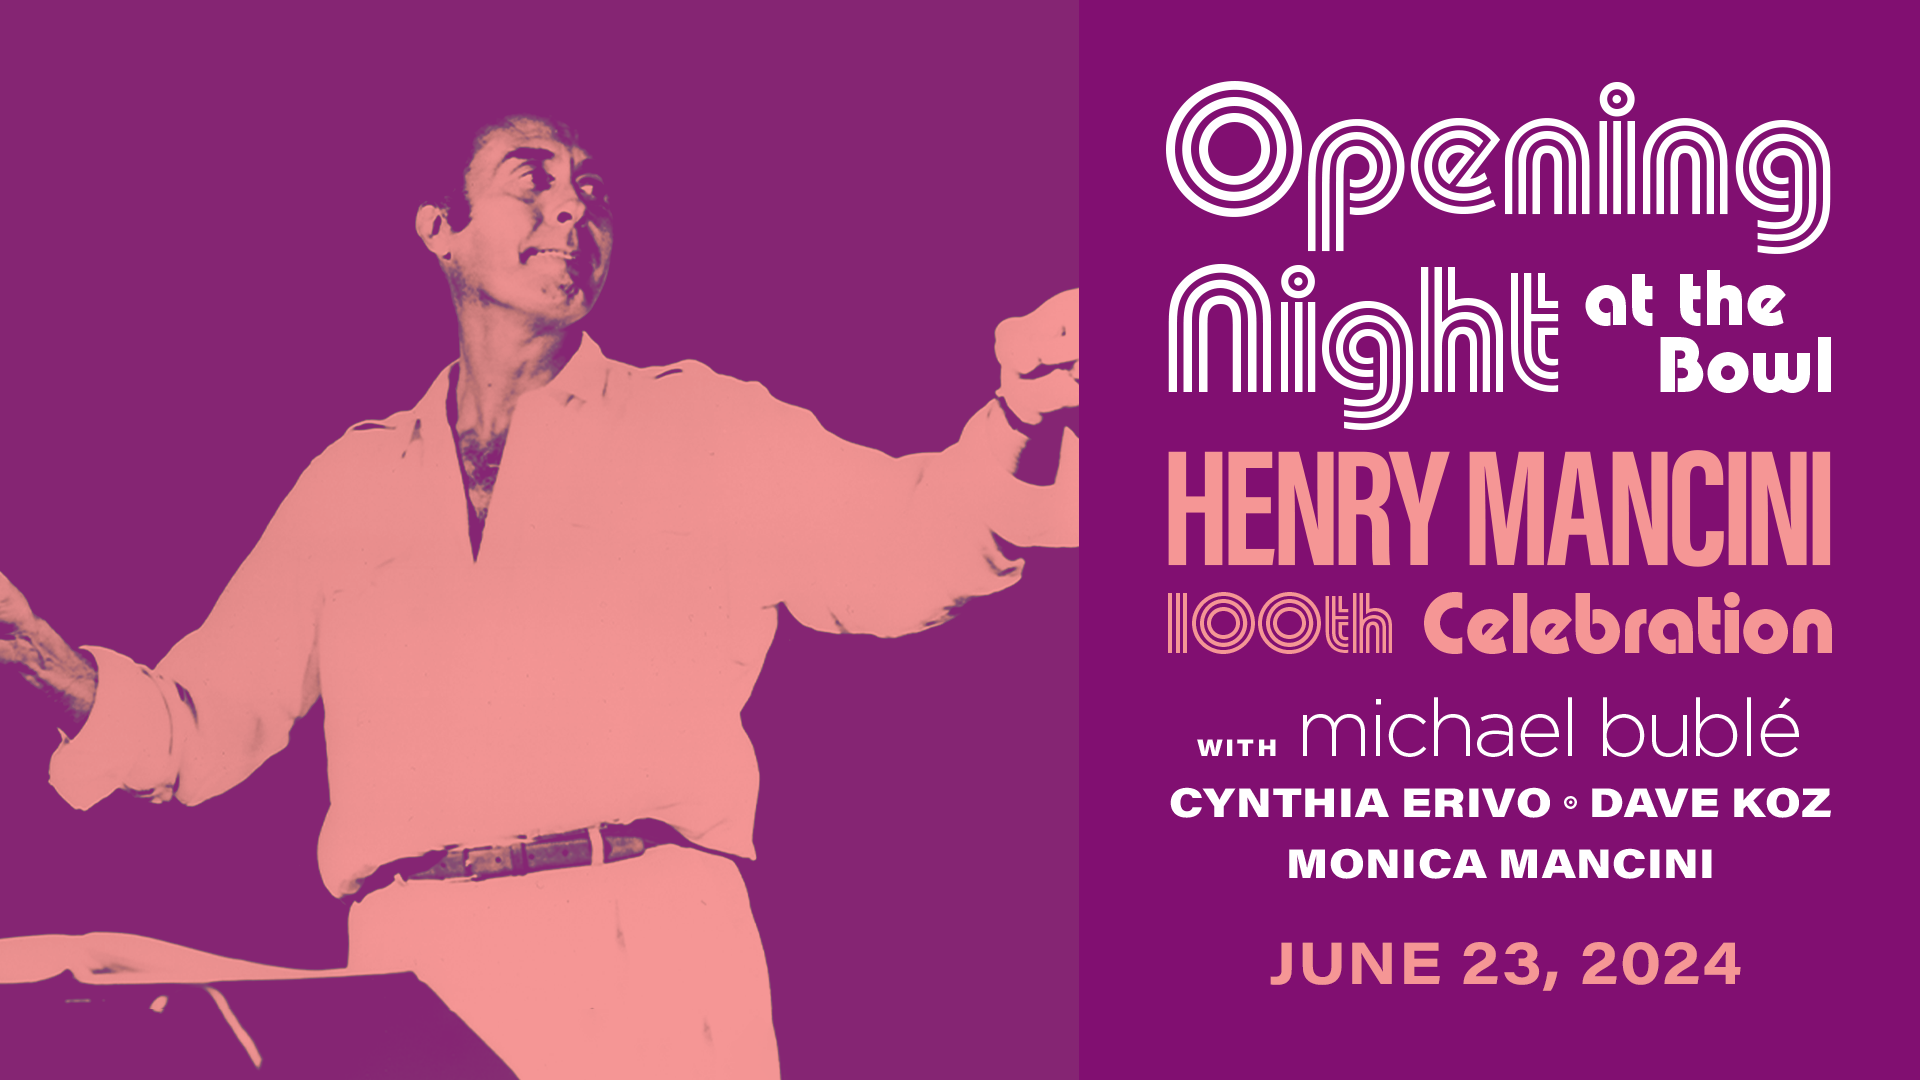 Opening Night at the Bowl | Henry Mancini 100th Celebration | with Michael Bublé | Cynthia Erivo | Dave Koz | Monica Mancini | June 23, 2024